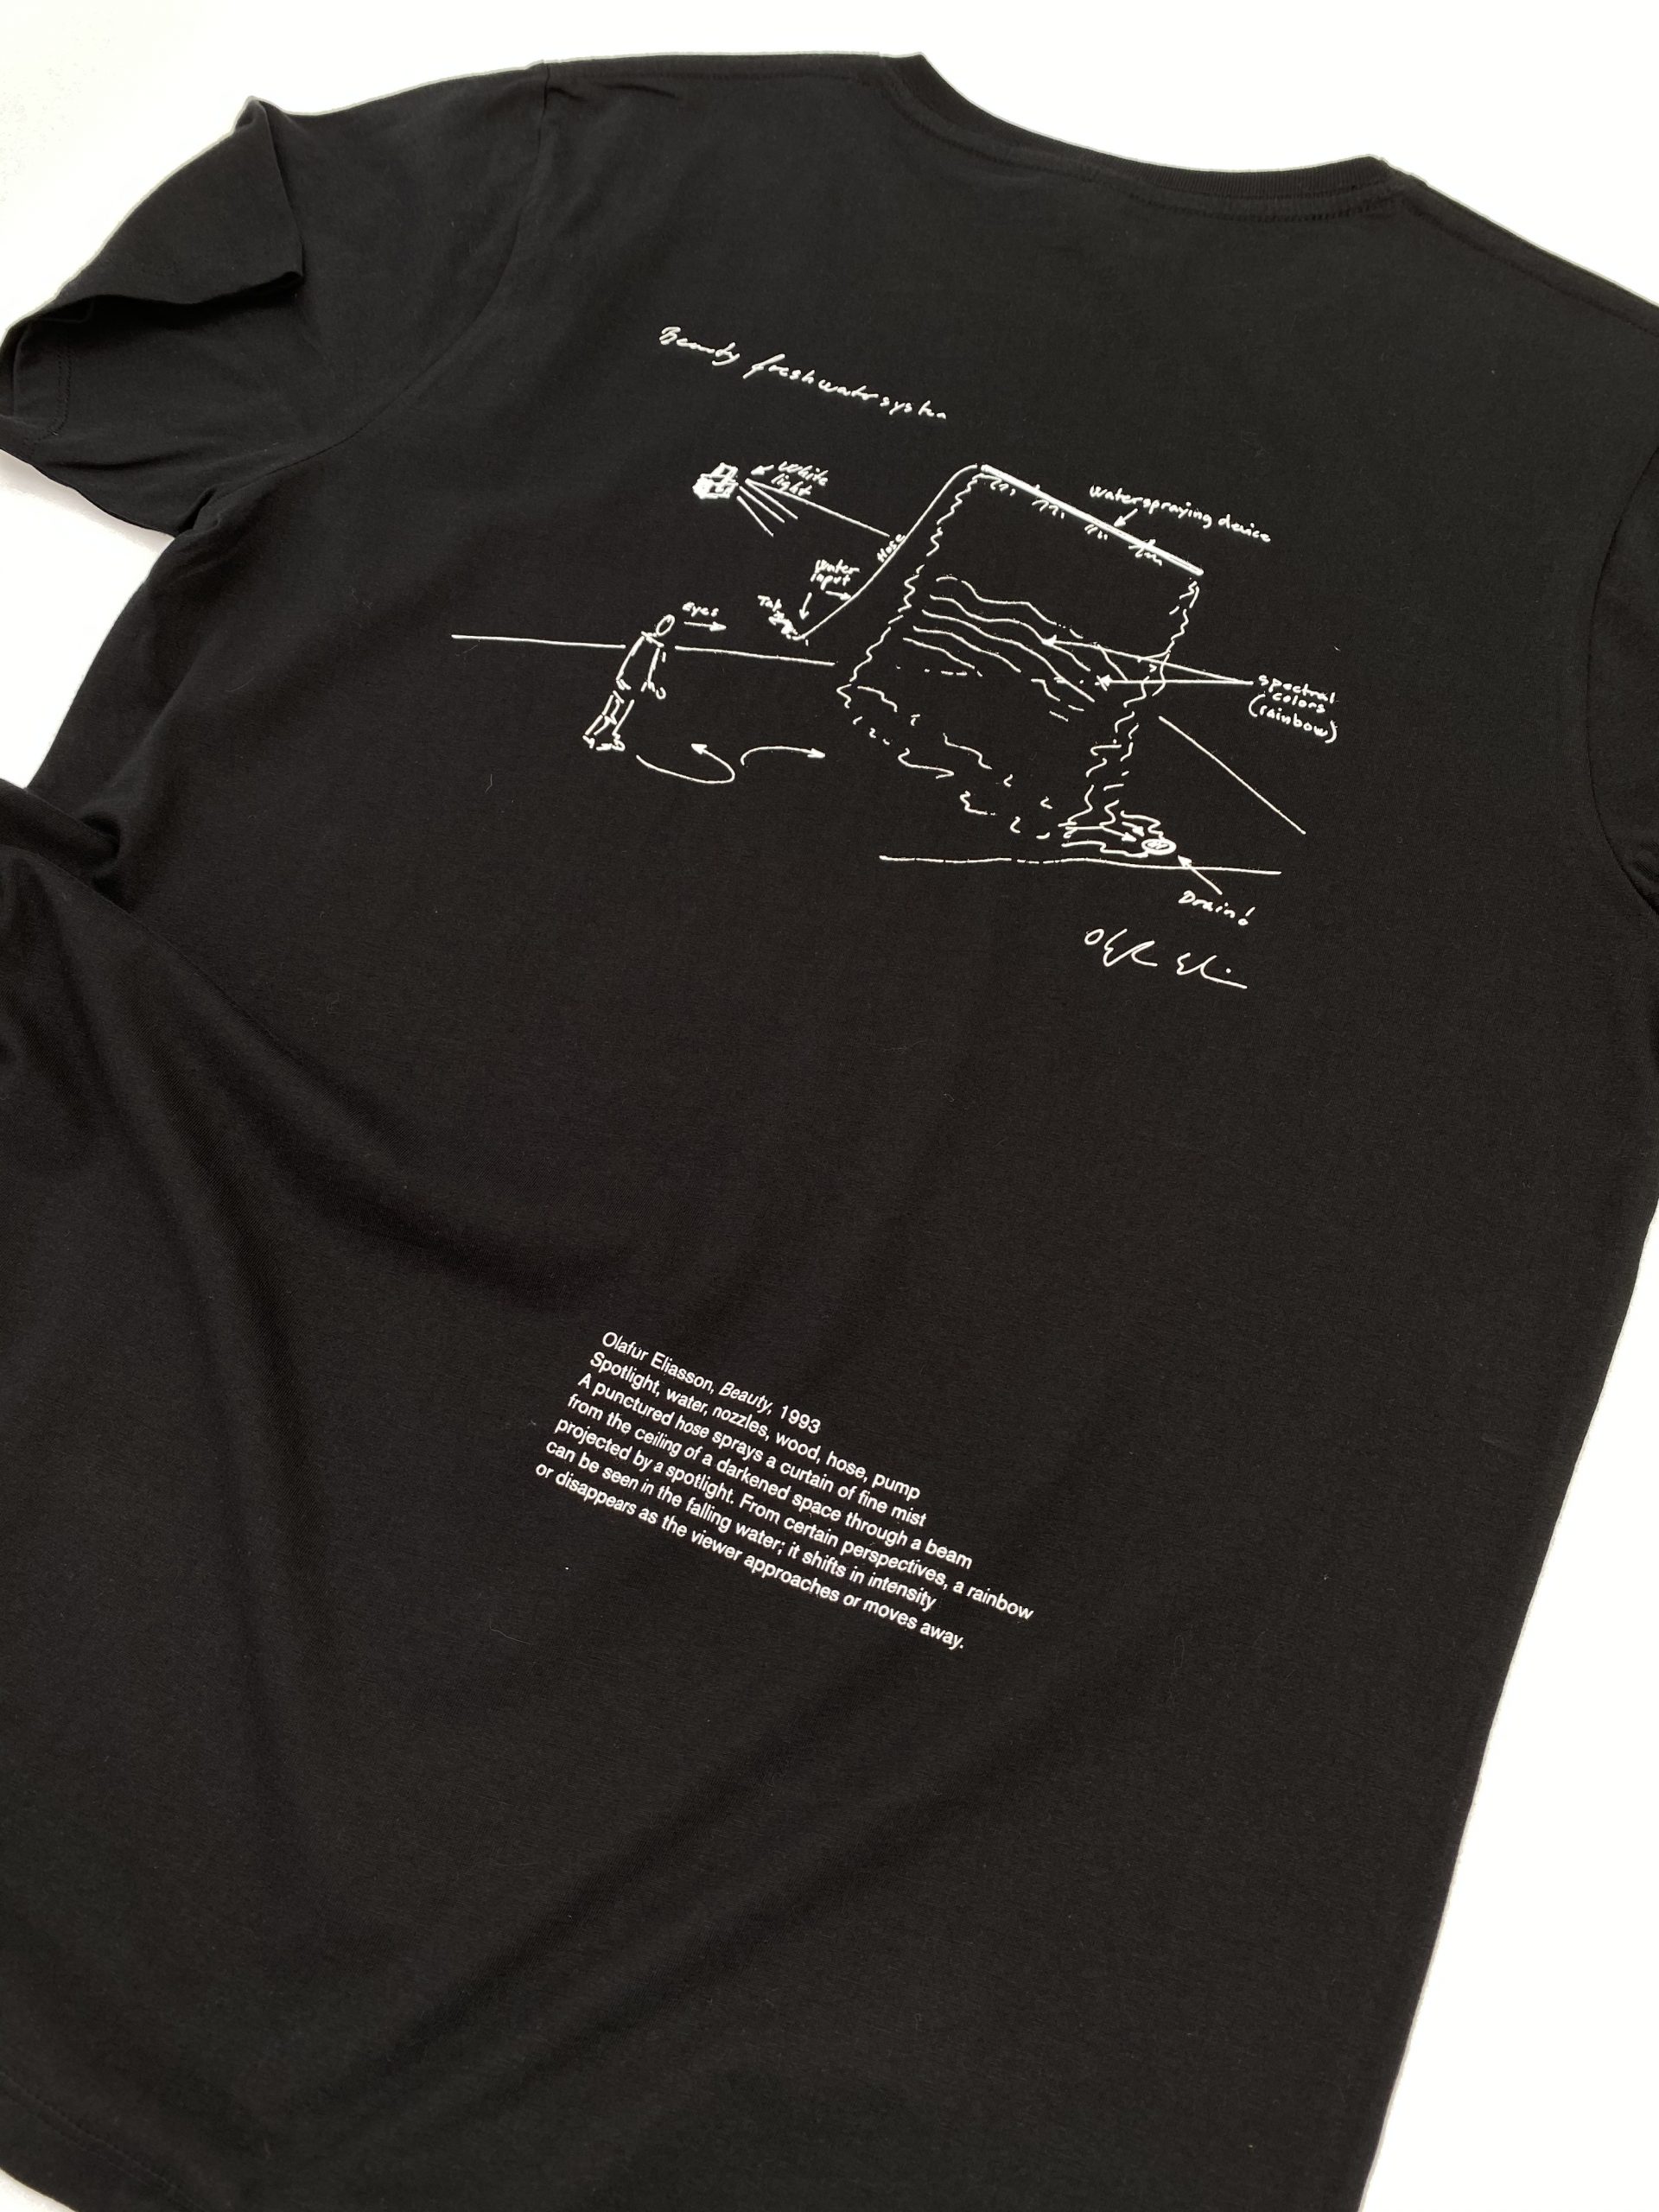 Guggenheim Bilbao Eliasson t-shirt print on demand